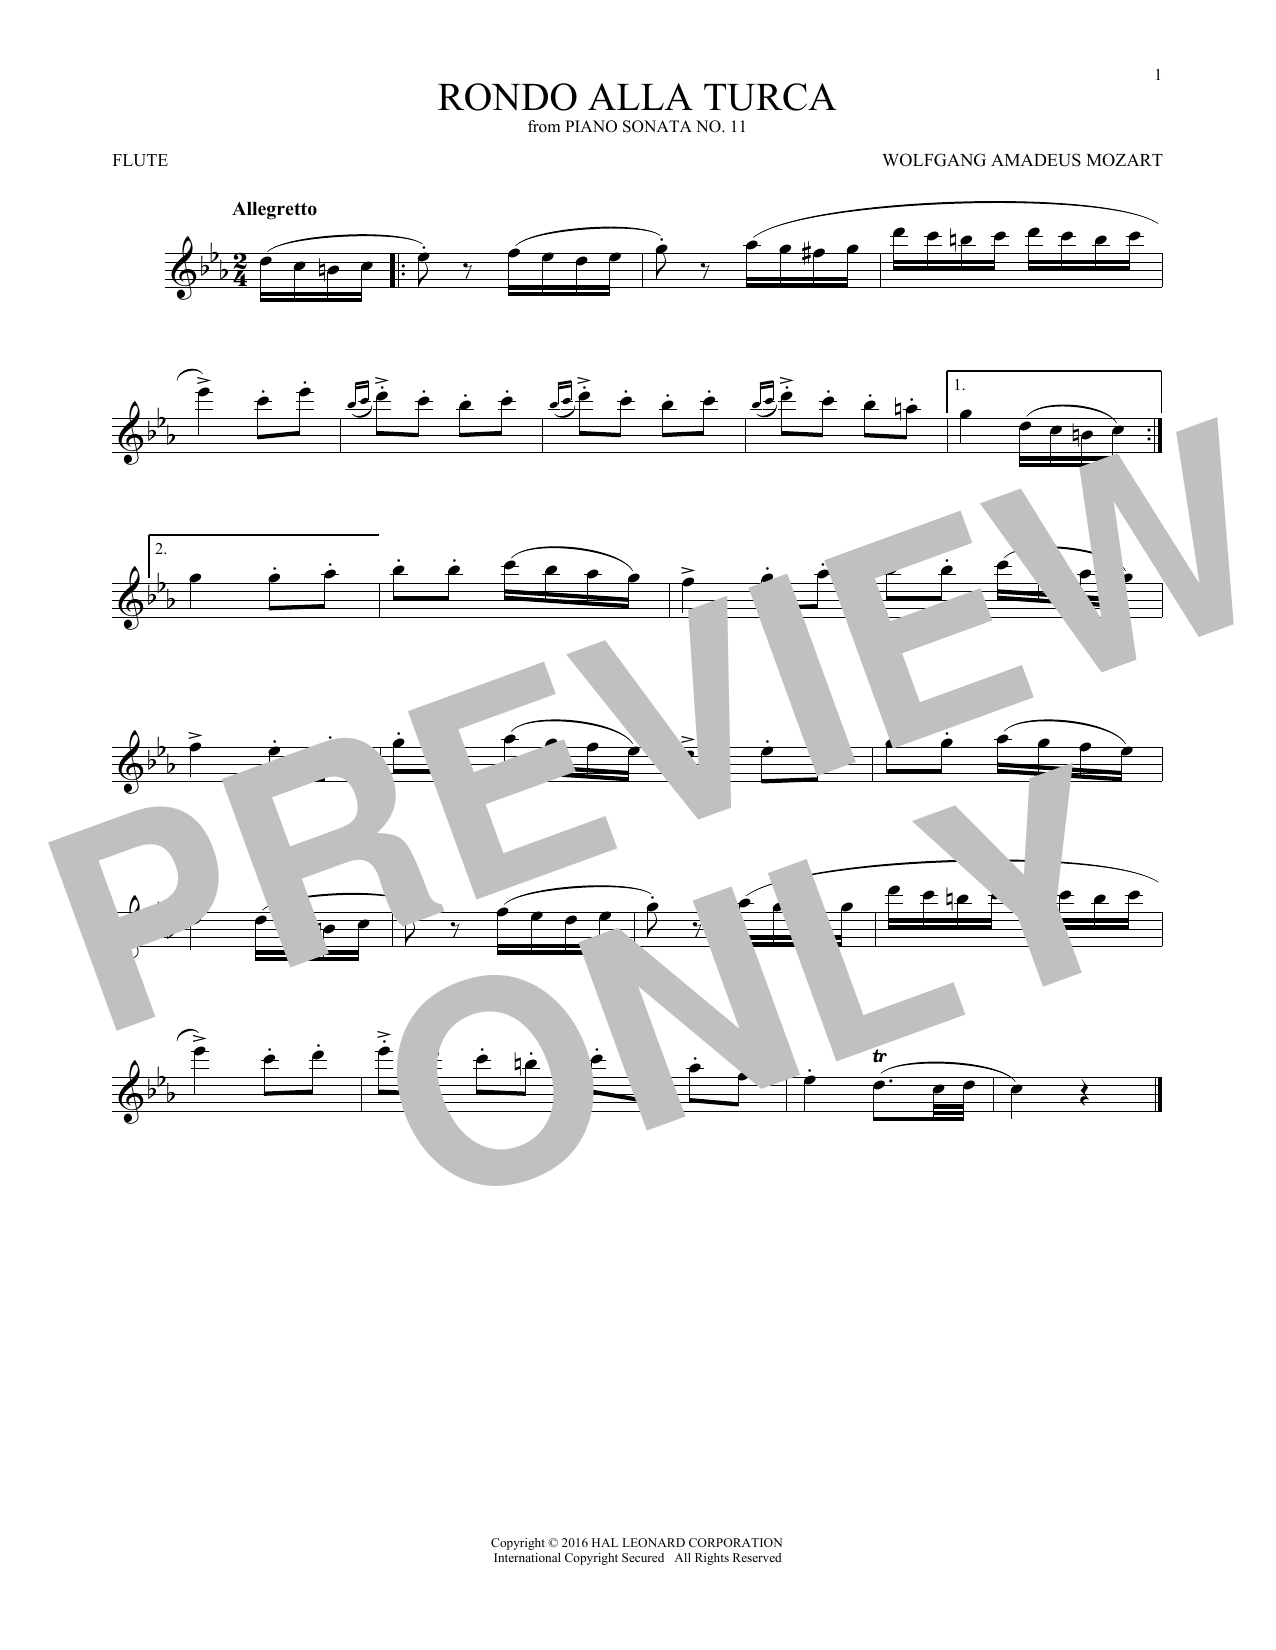 Wolfgang Amadeus Mozart Rondo Alla Turca Sheet Music Notes & Chords for Violin - Download or Print PDF